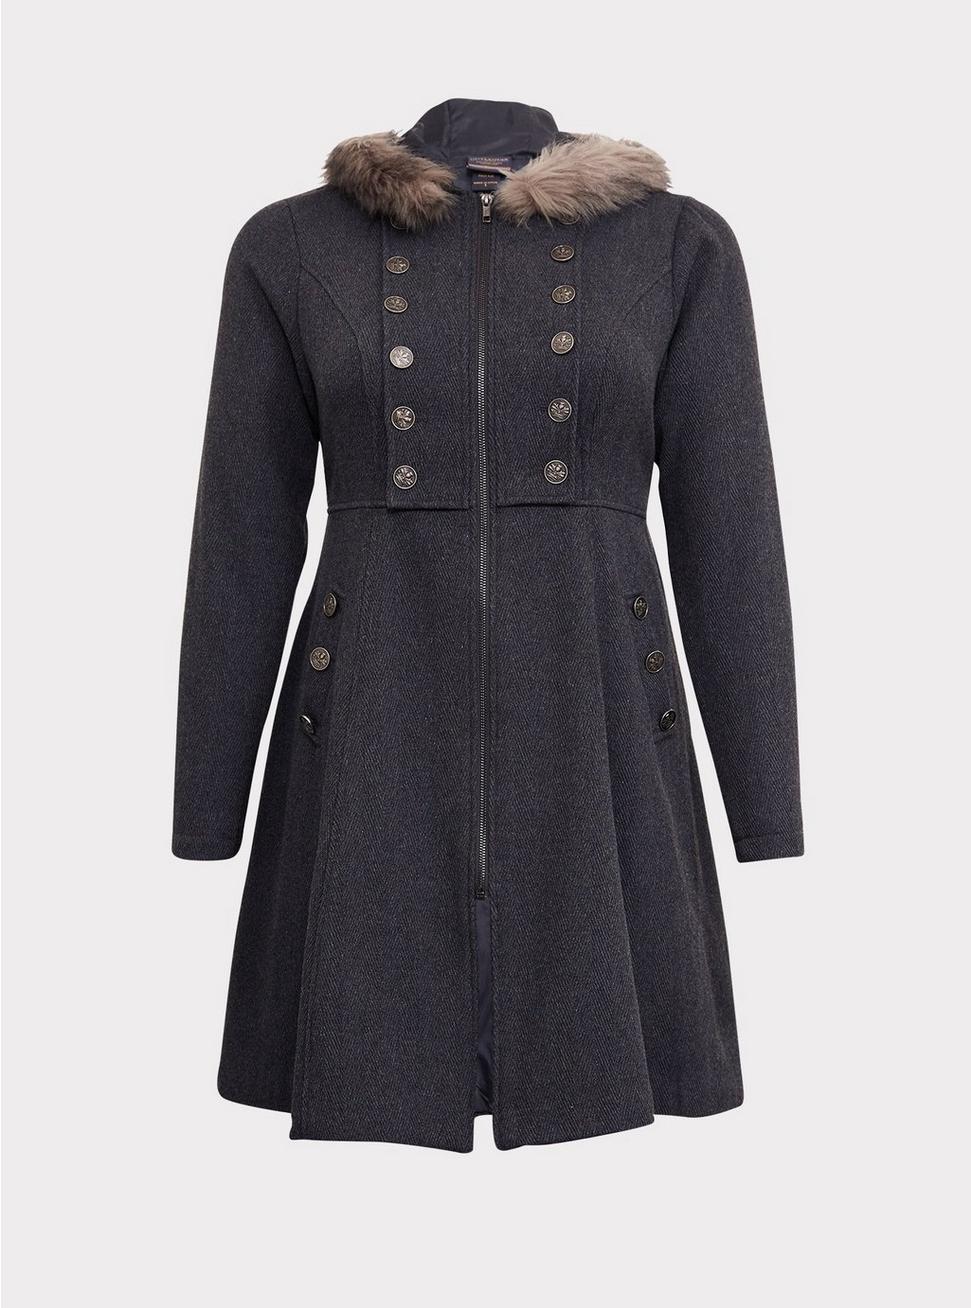 Plus Size - Outlander Jaime Grey Faux Fur Trim Woolen Swing Coat - Torrid